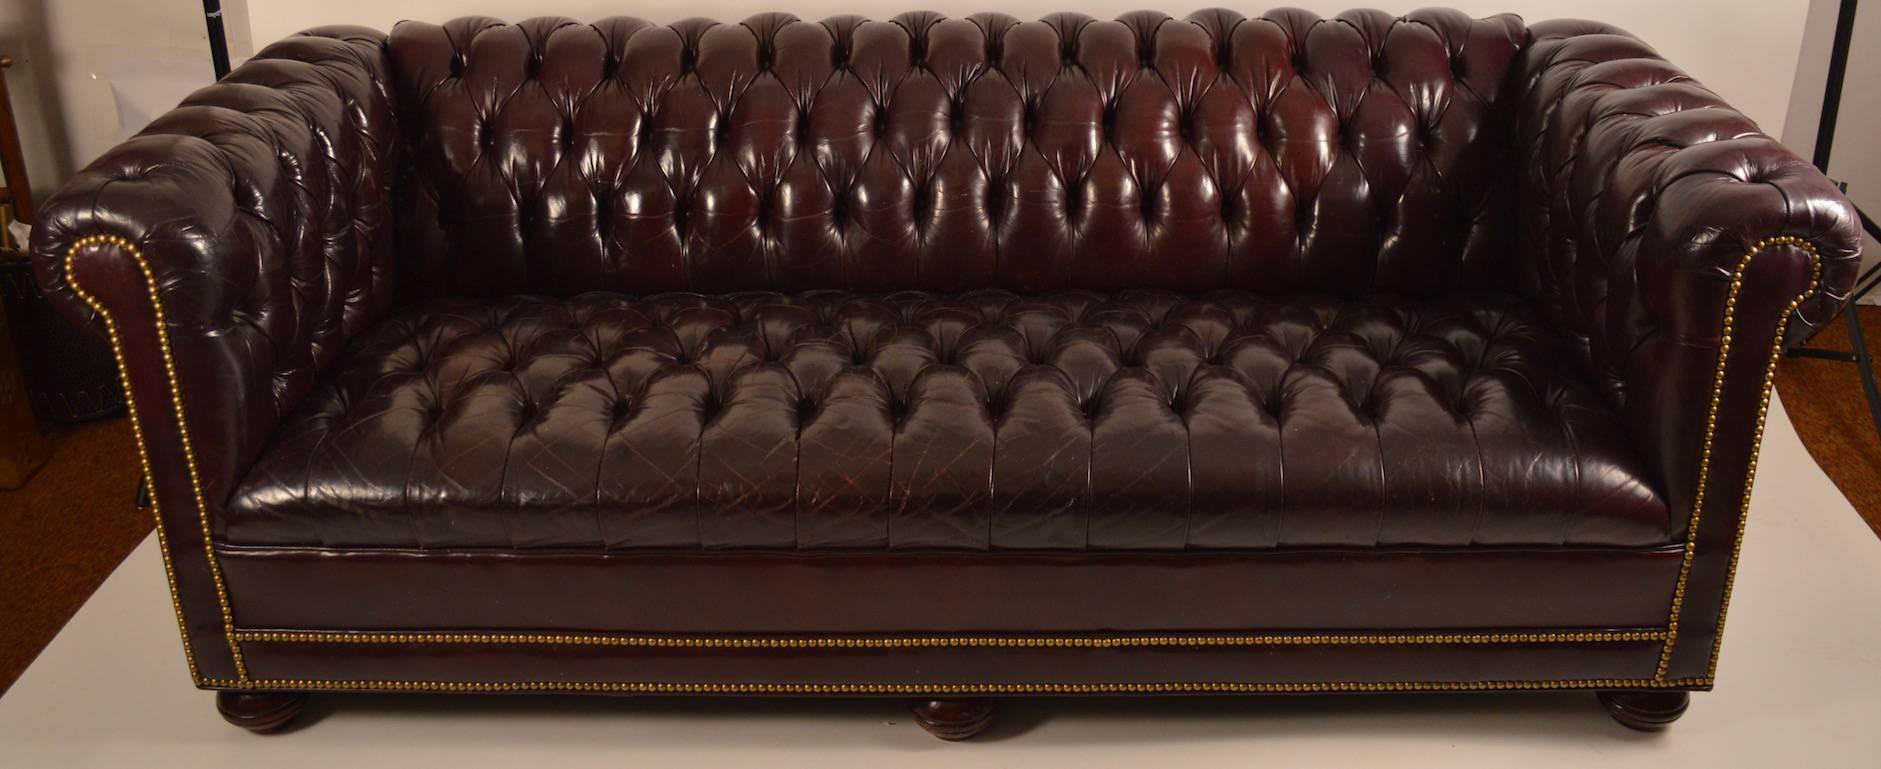 classic leather furniture